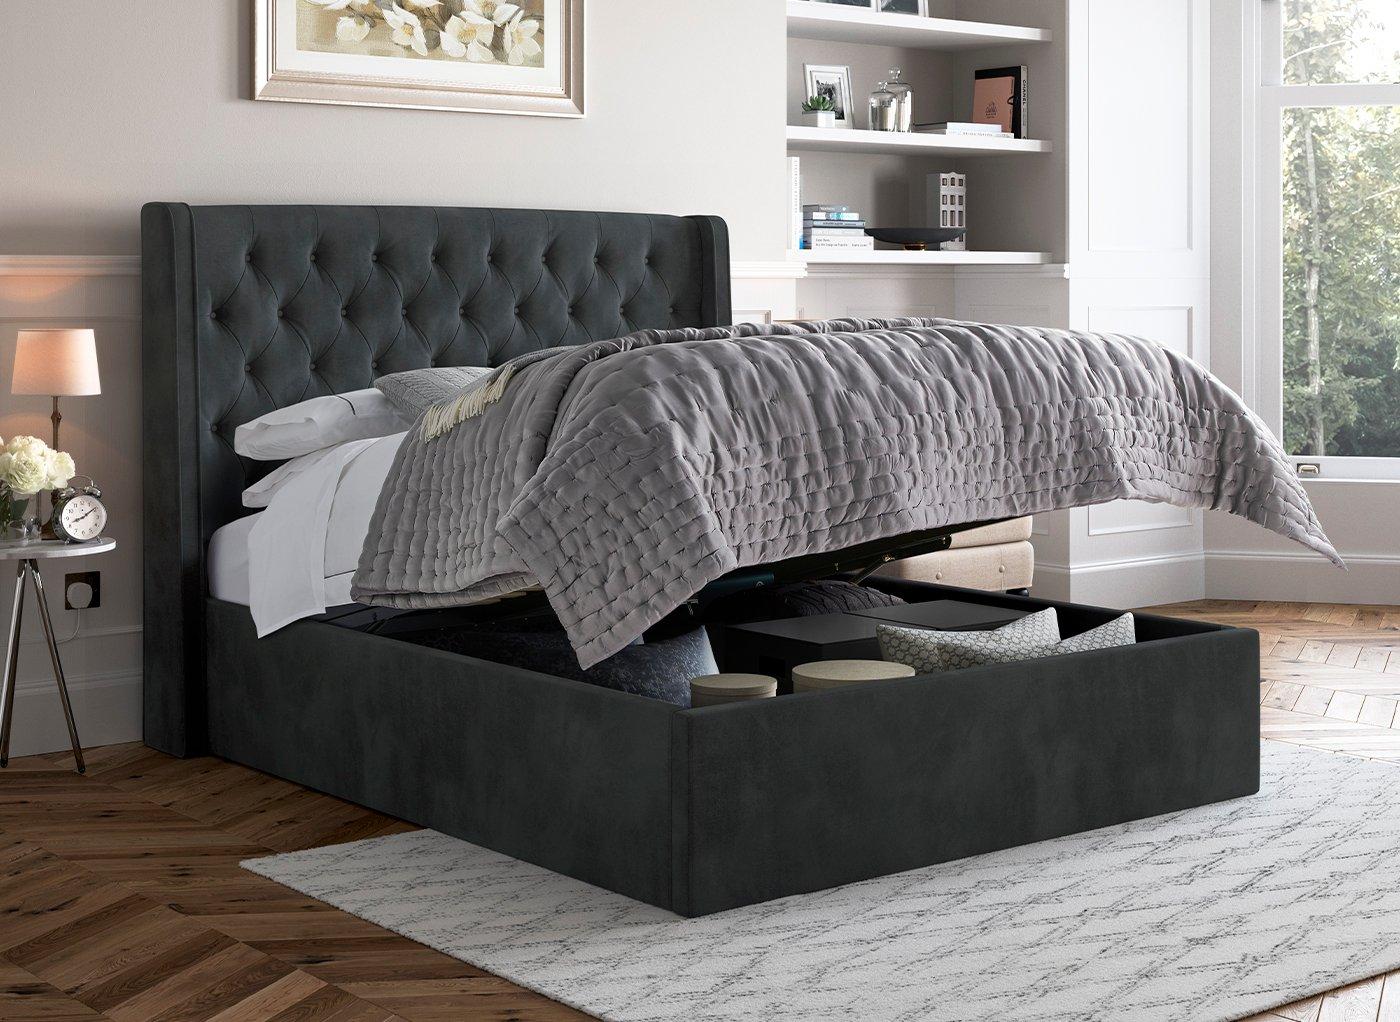 Black ottoman bed